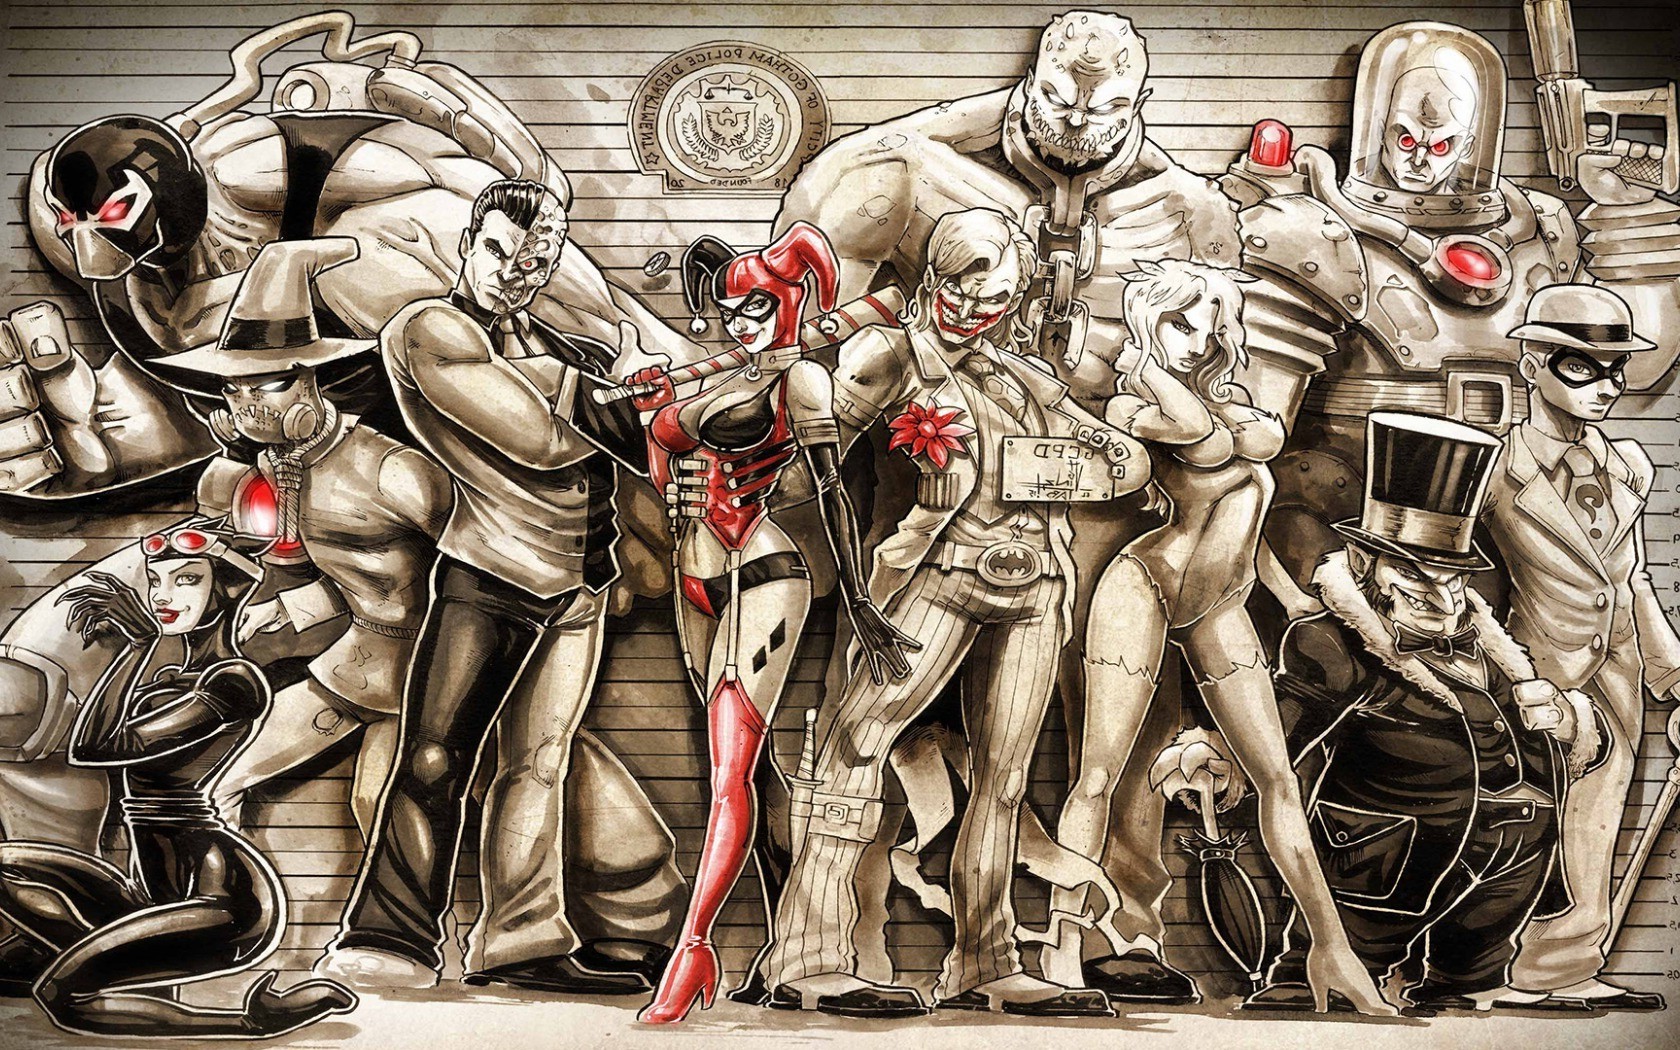 Harley Quinn Art Wallpapers